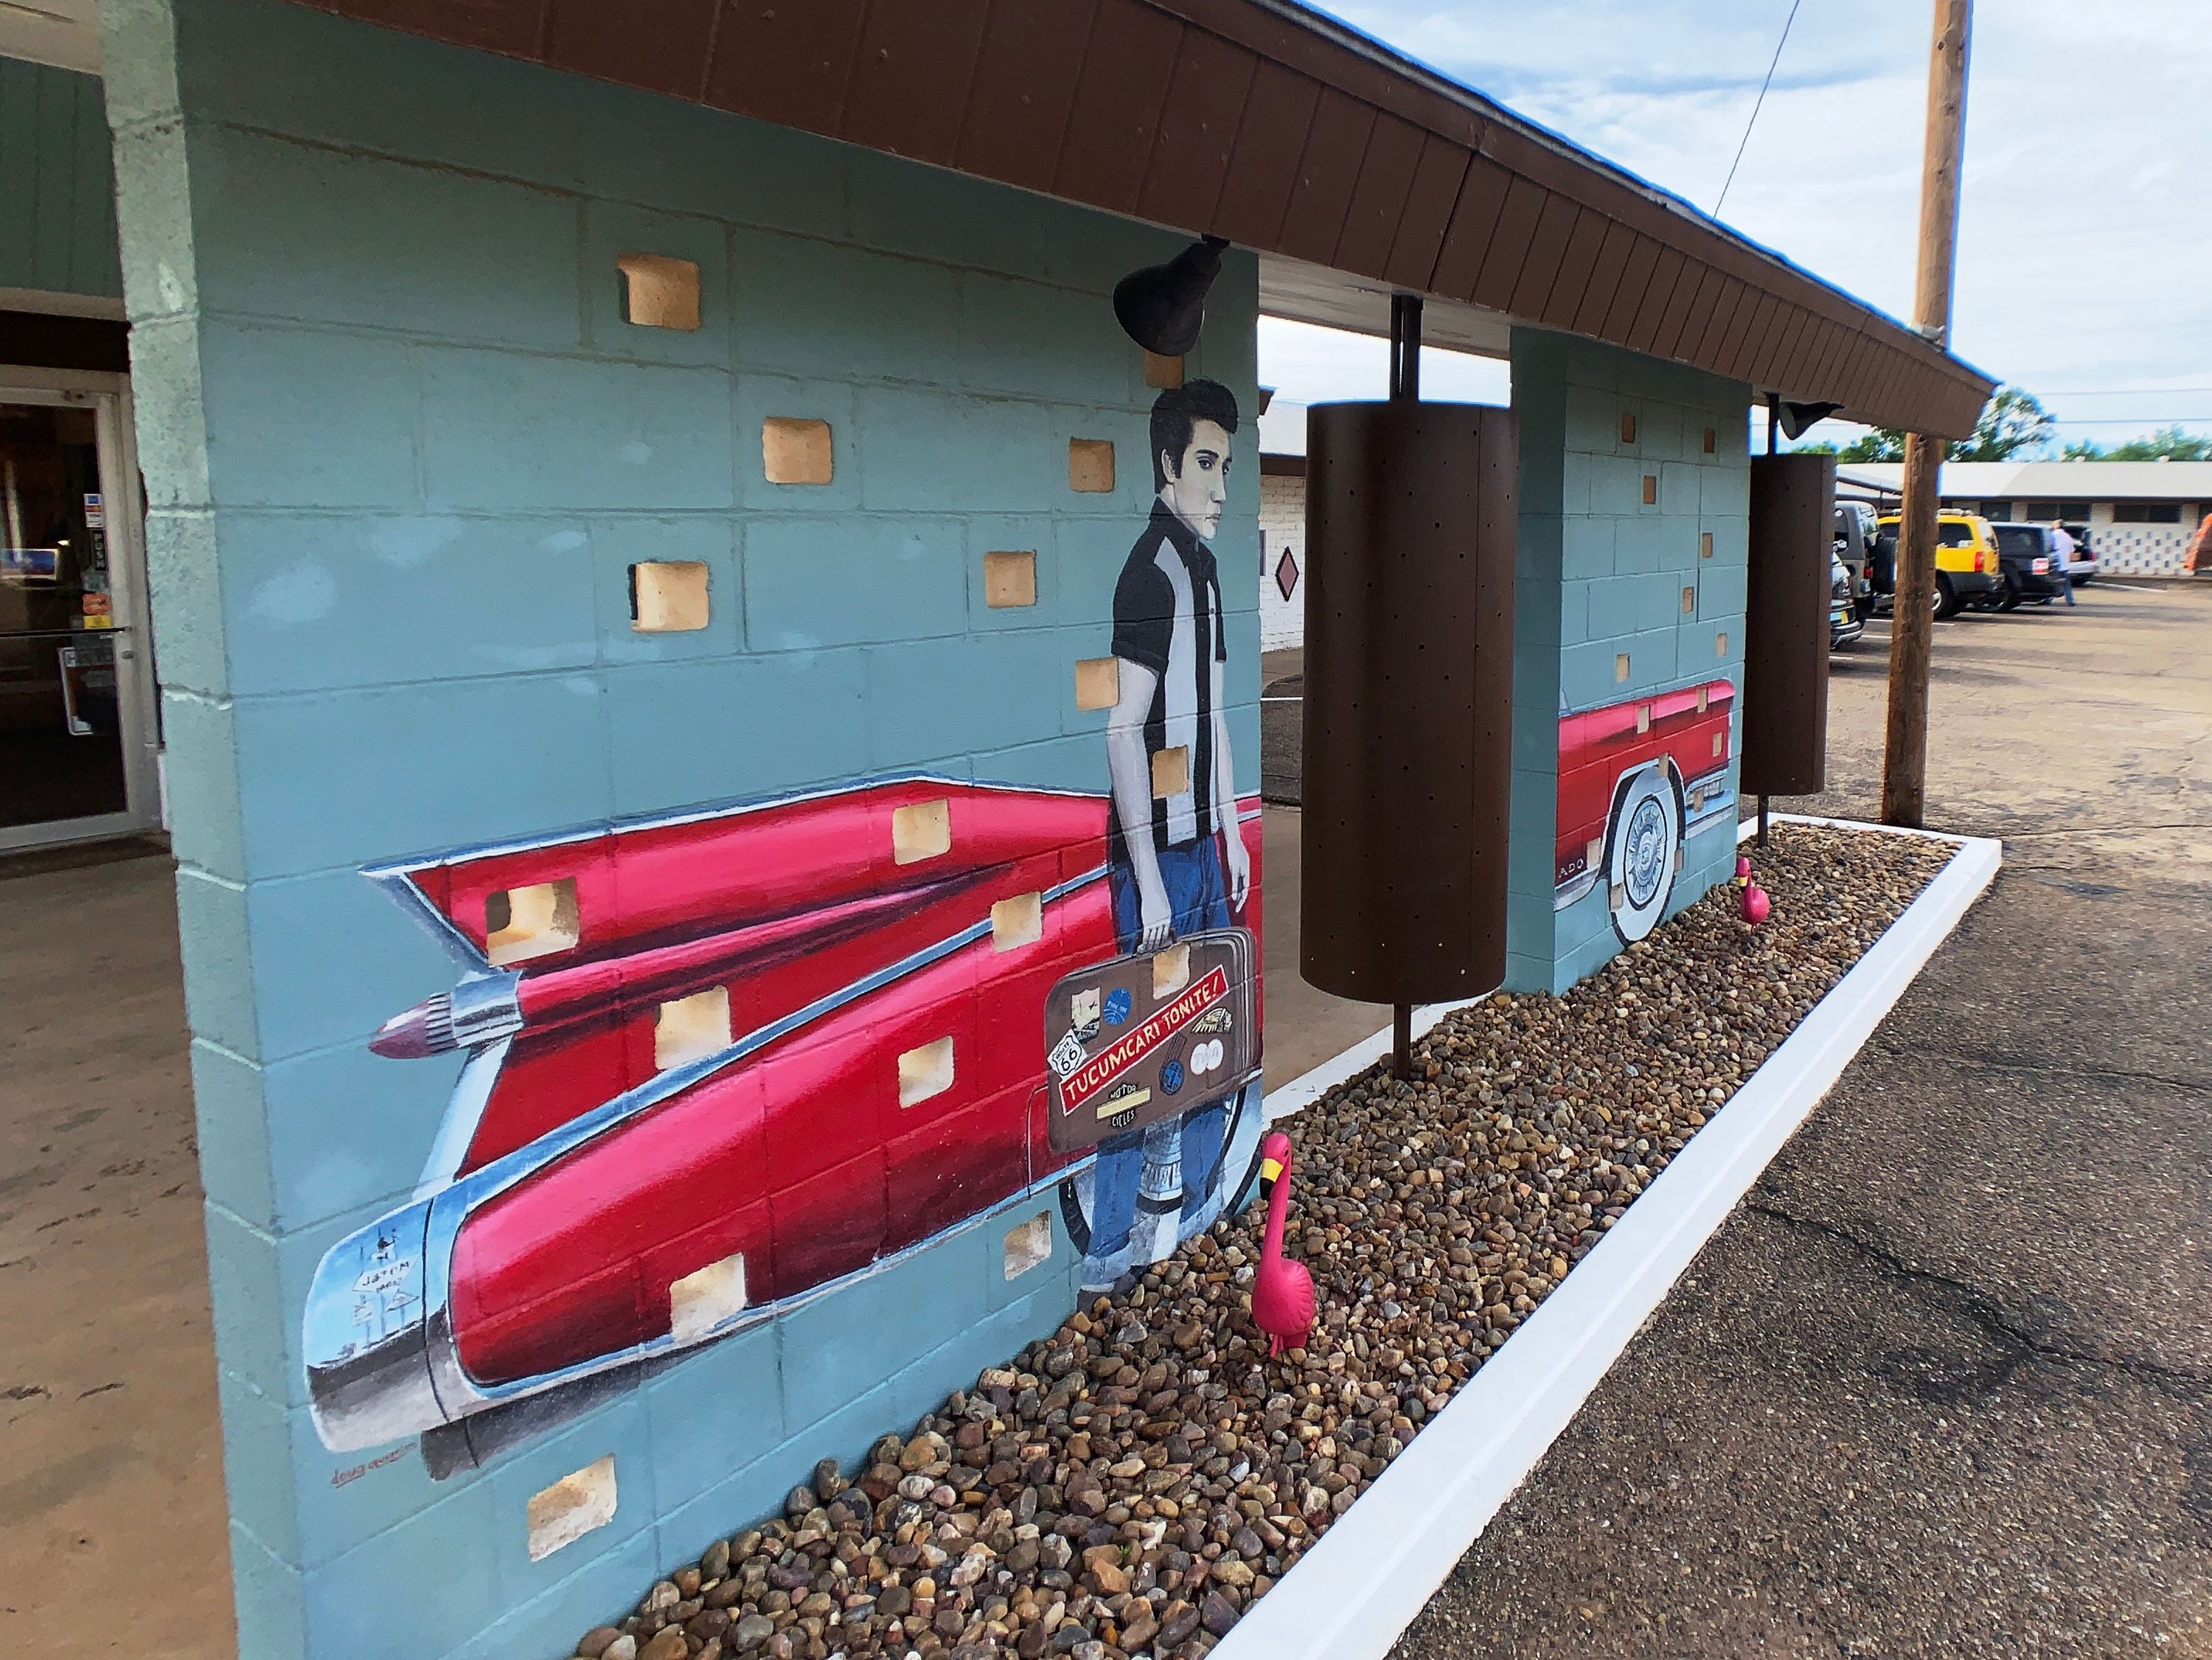 Tucumari Tonight! A mural at Motel Safari in Tucumari, NM